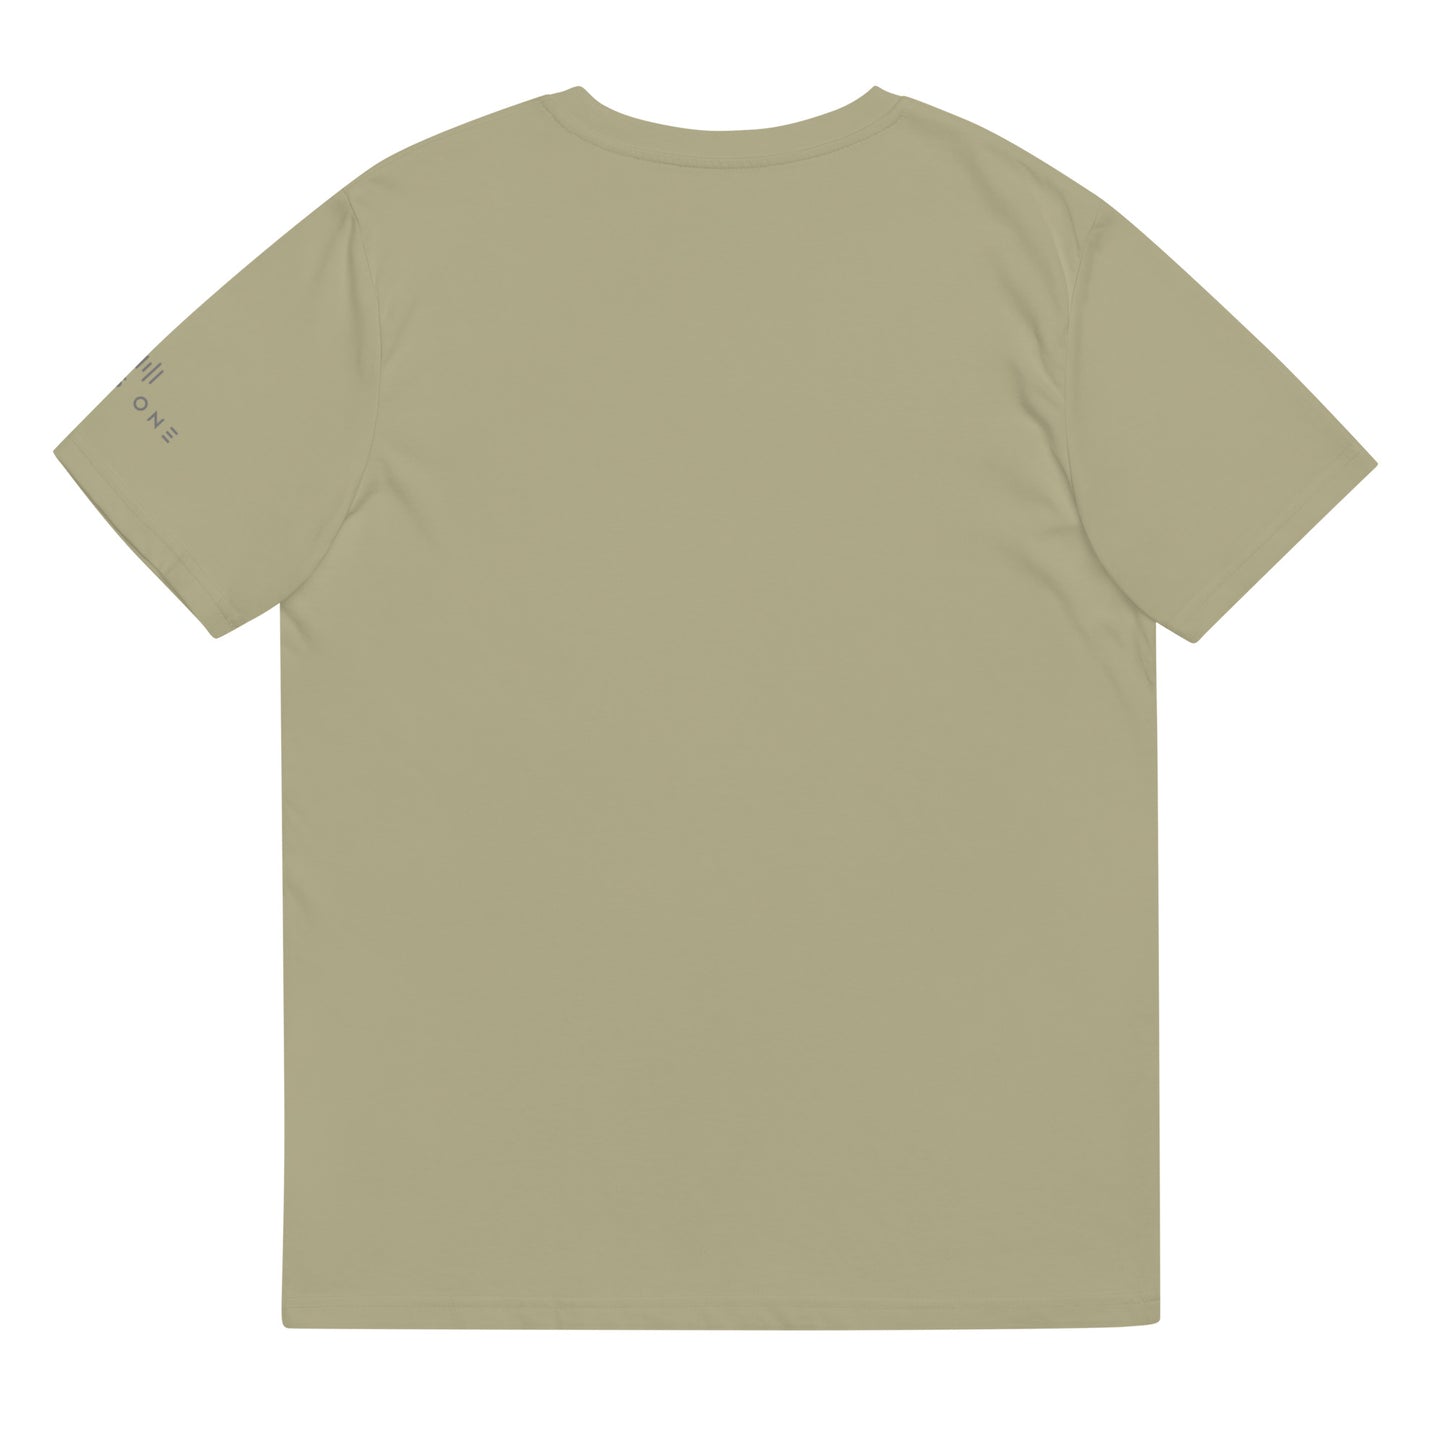 The MC (v1) Unisex organic cotton t-shirt